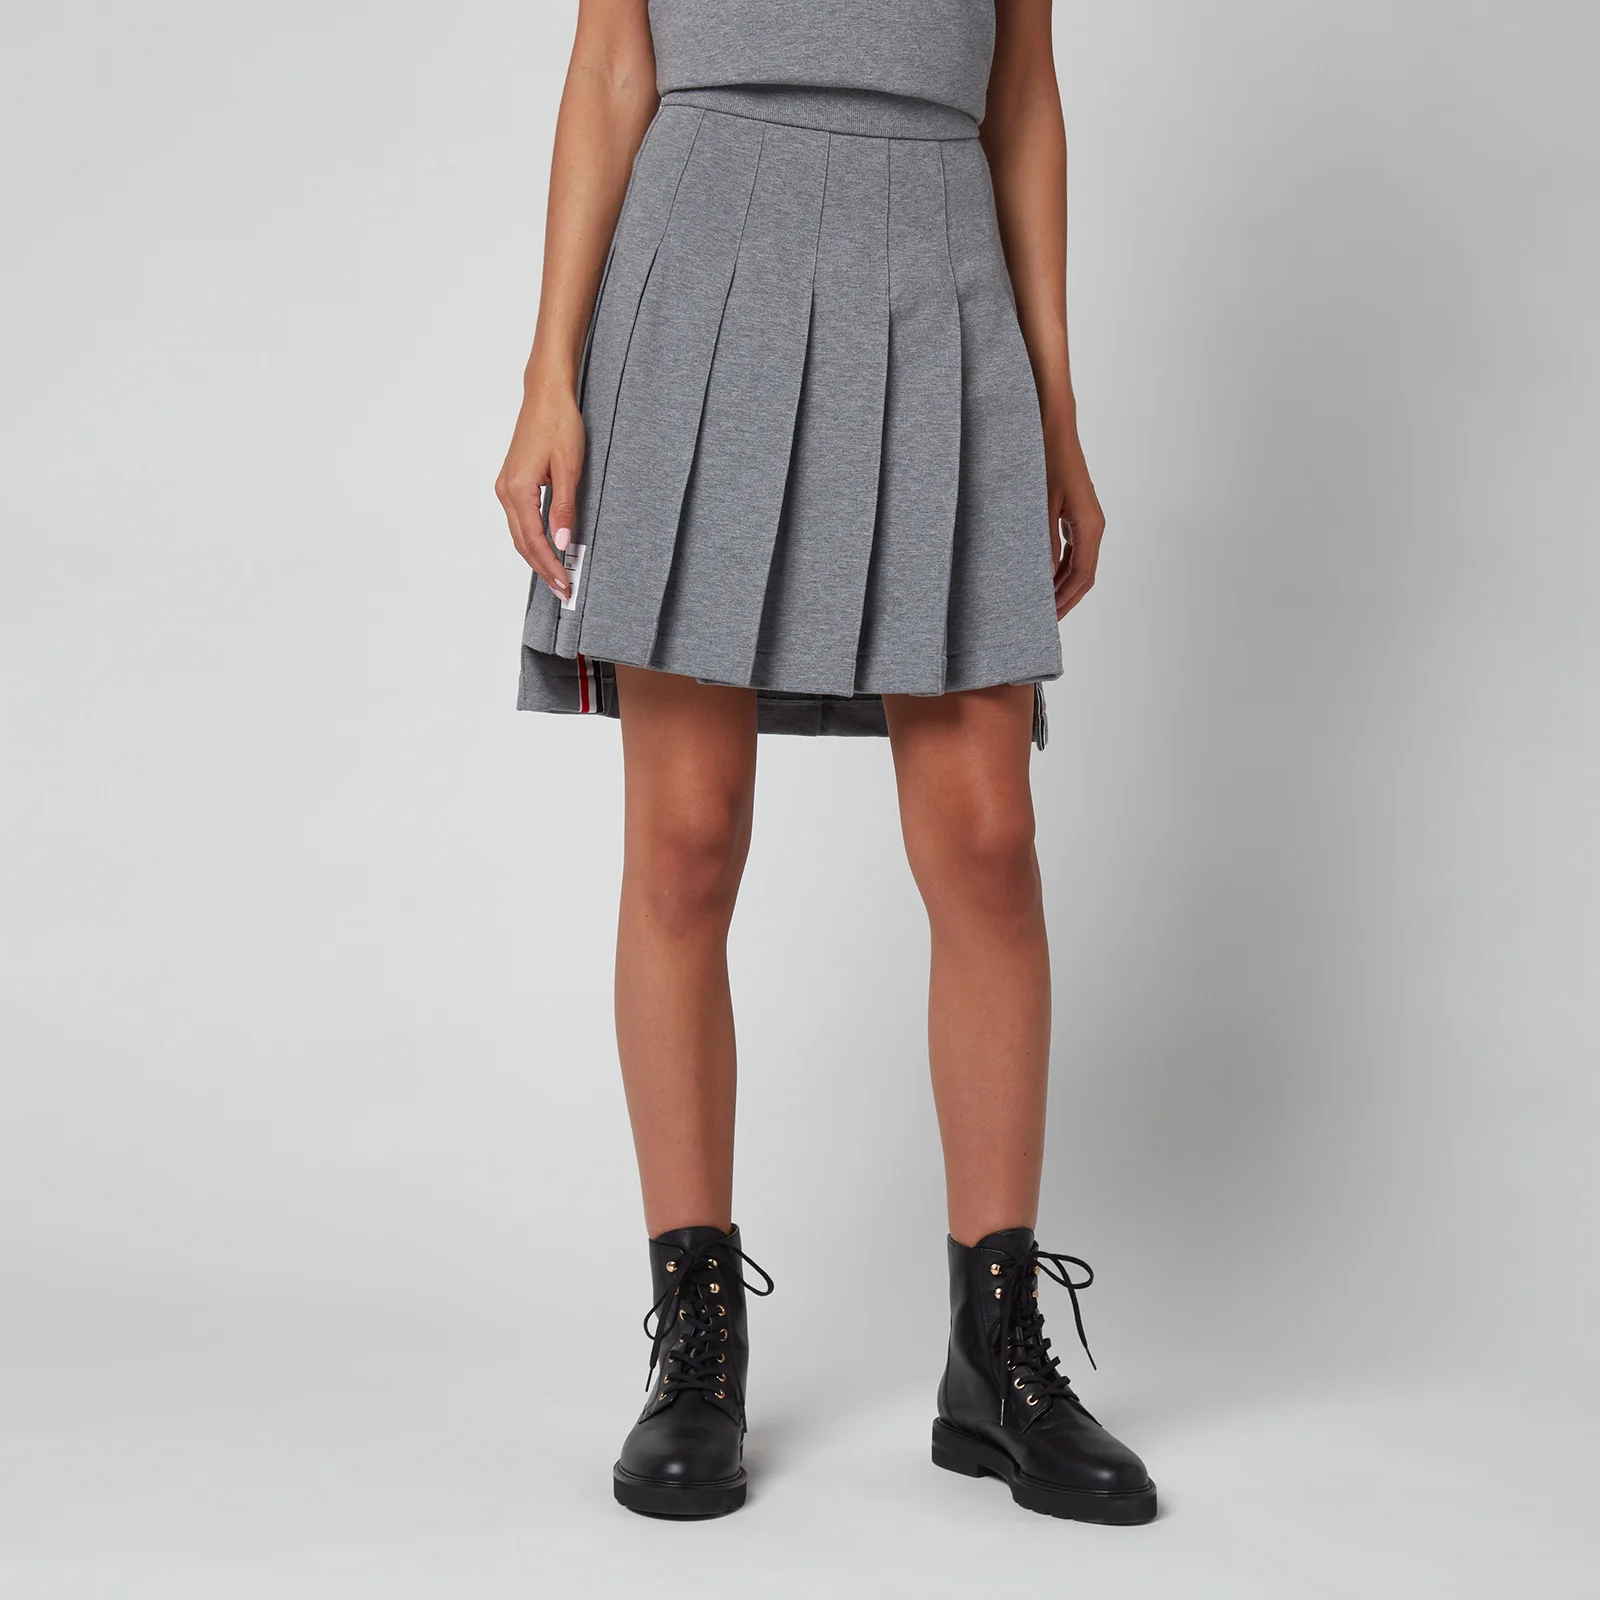 Thom Browne Women's Mini Pleated Skirt - Med Grey Image 1